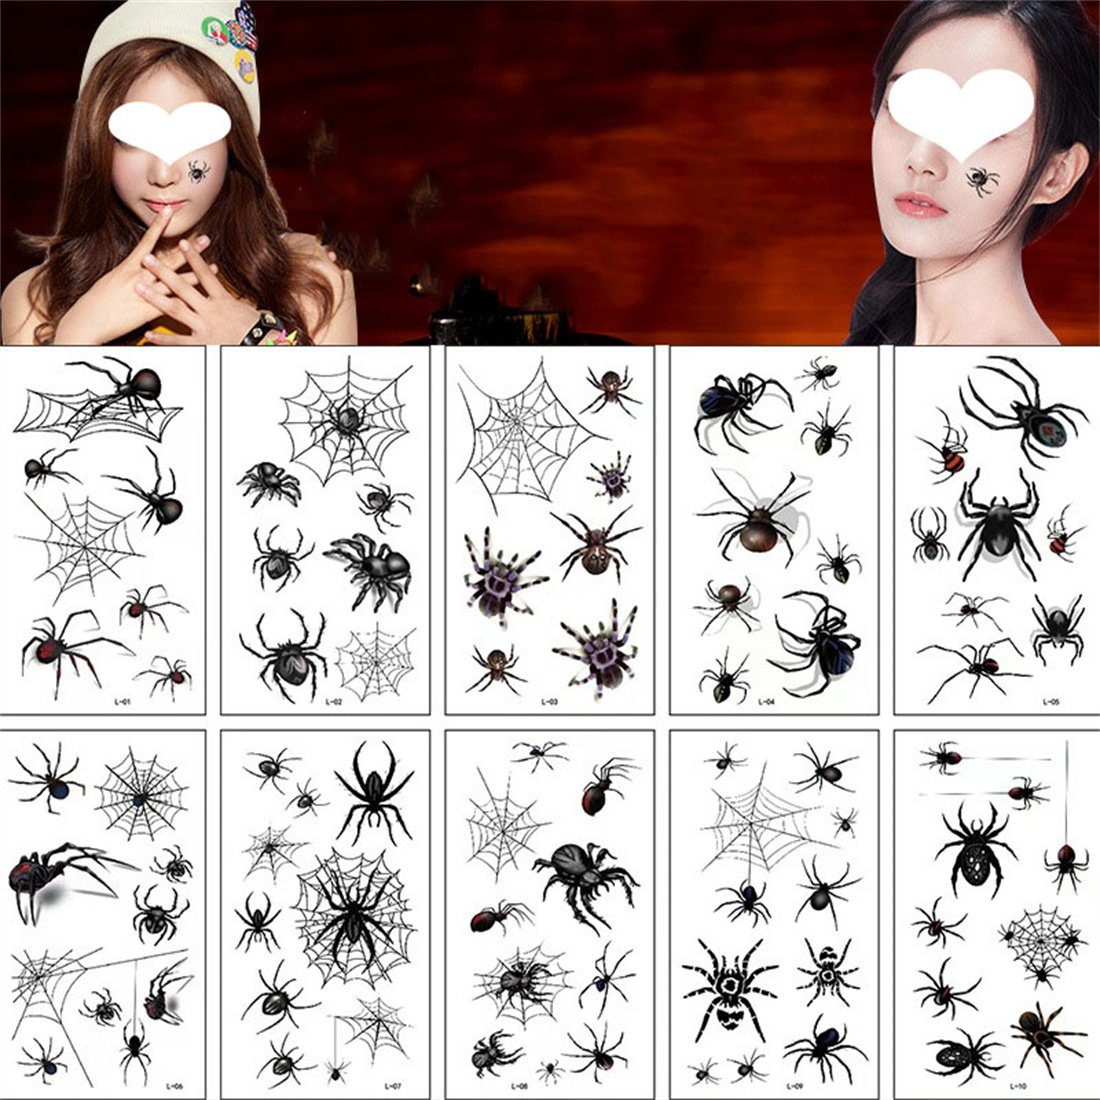 DÖRÖY Schmuck-Tattoo Halloween Spider Tattoo Aufkleber 20 Stück,3D Spider Tattoo Aufkleber